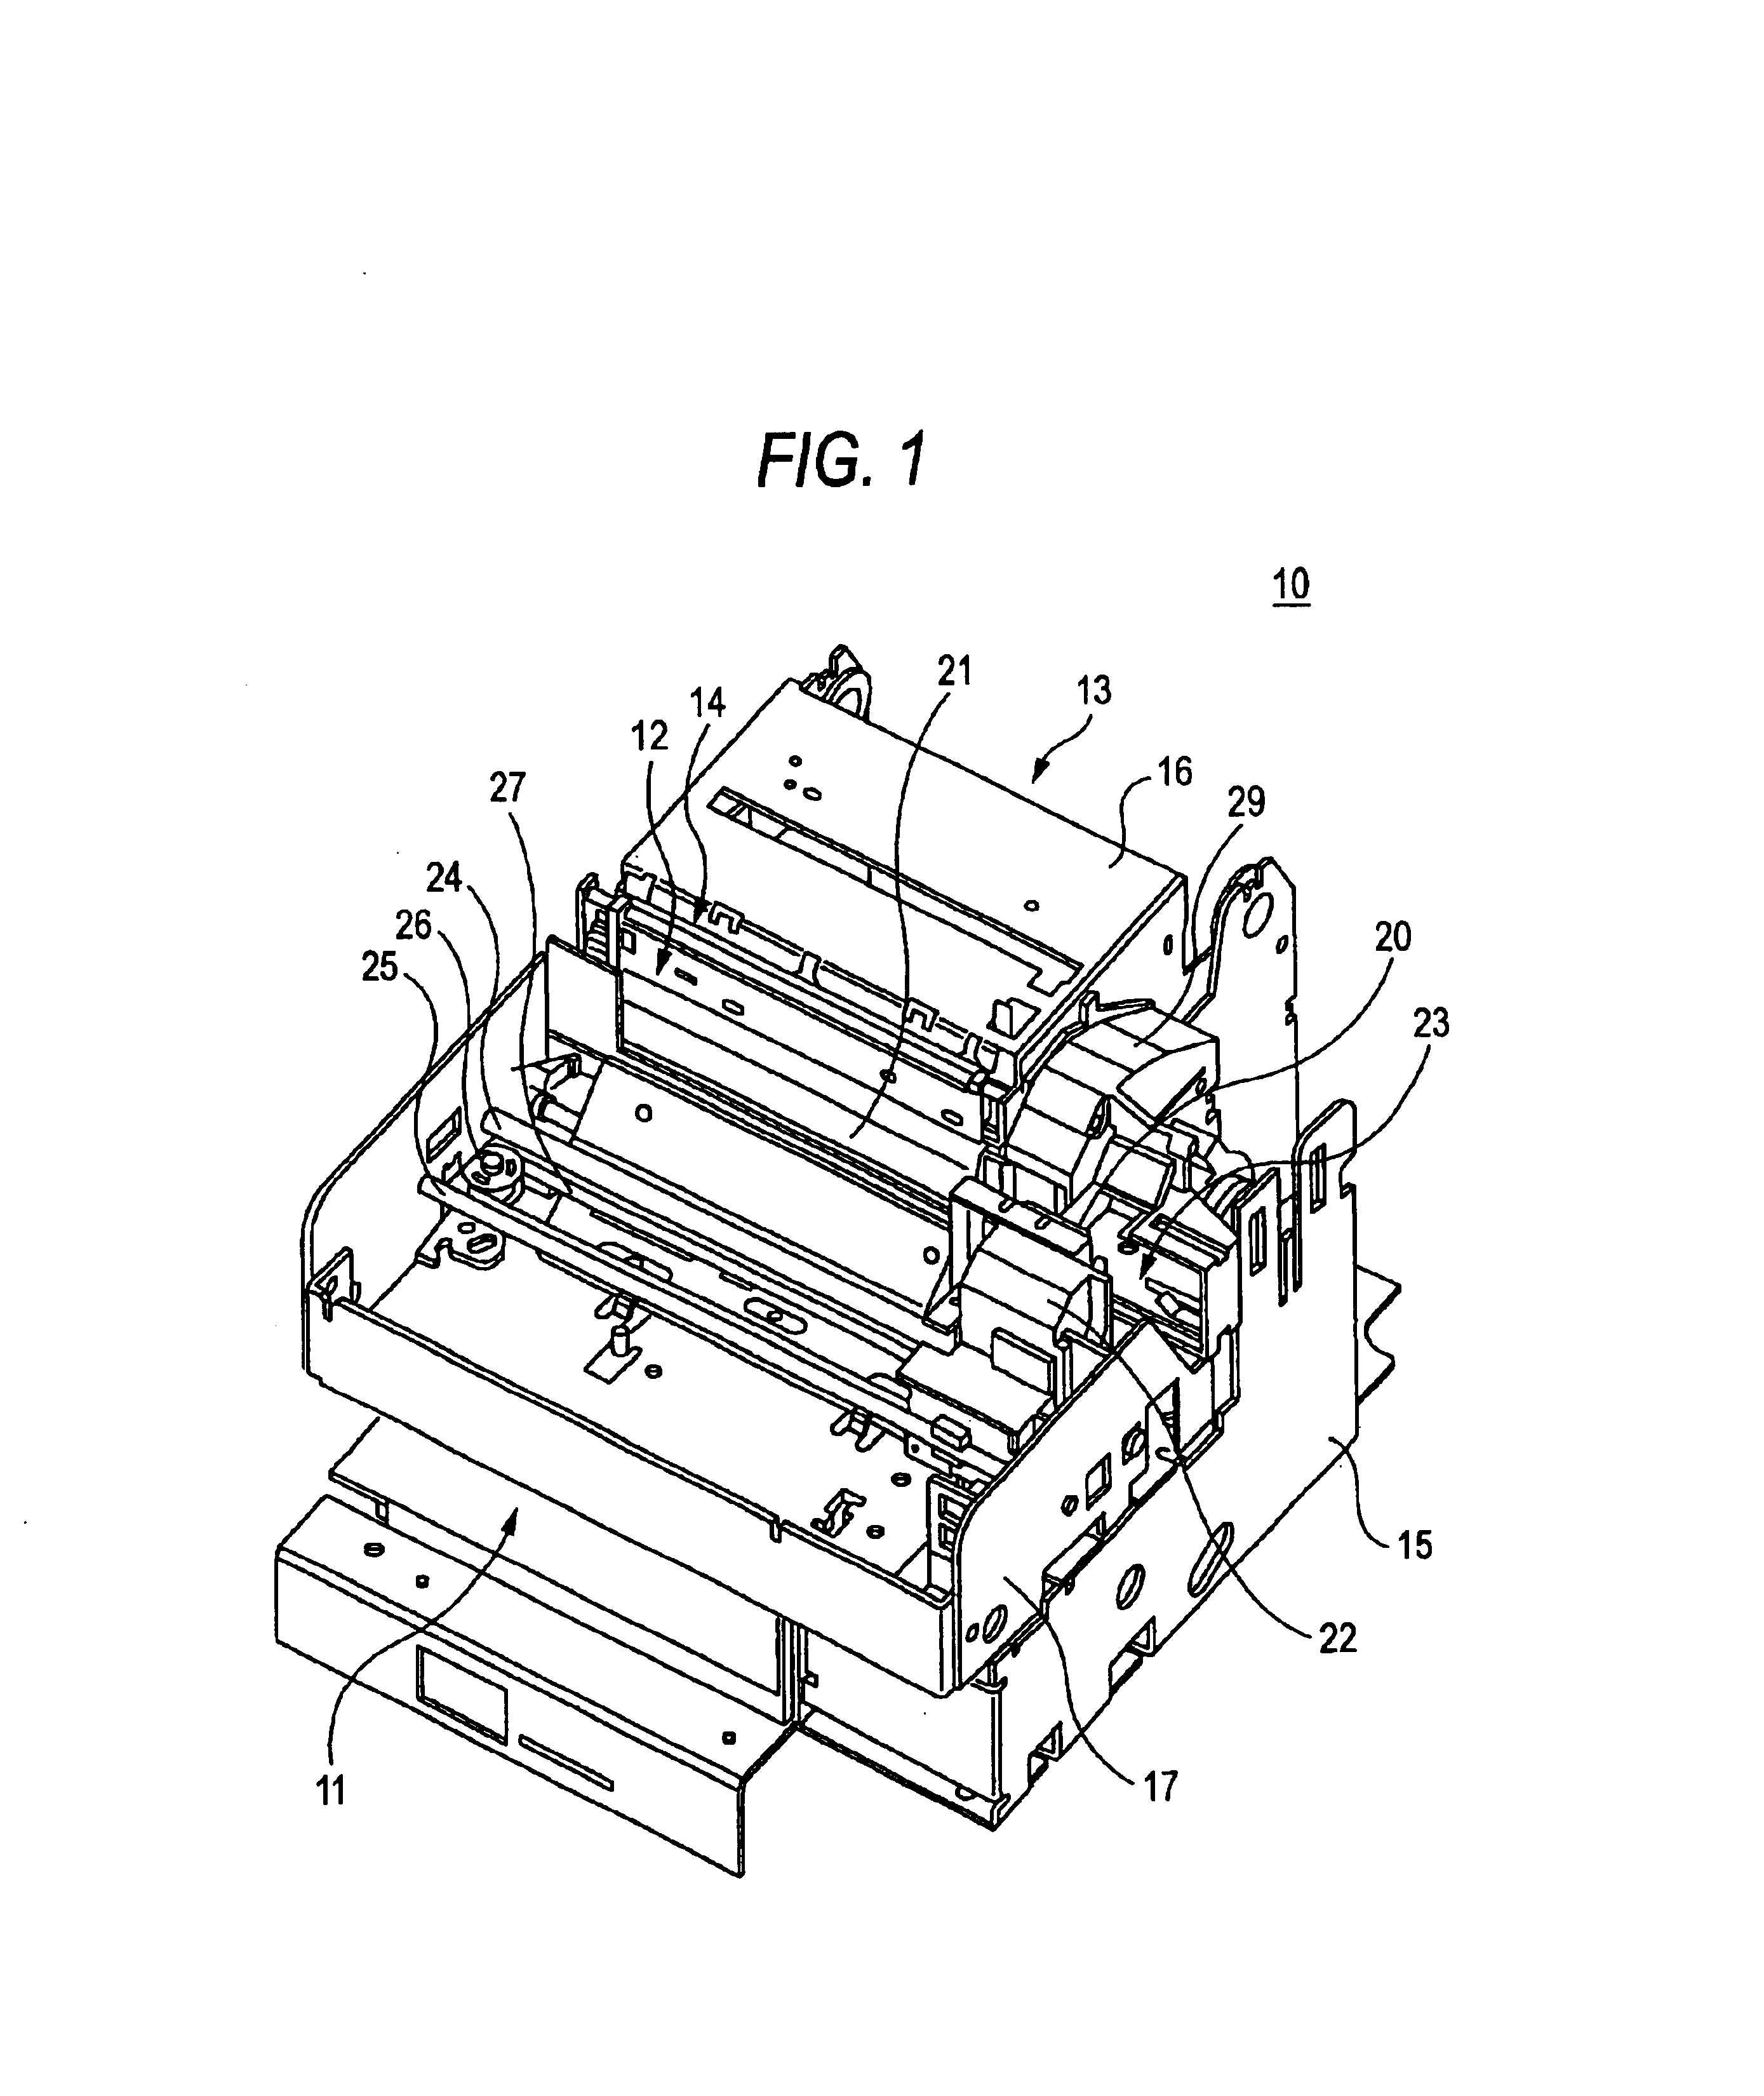 Printer with sheet reversal mechanism